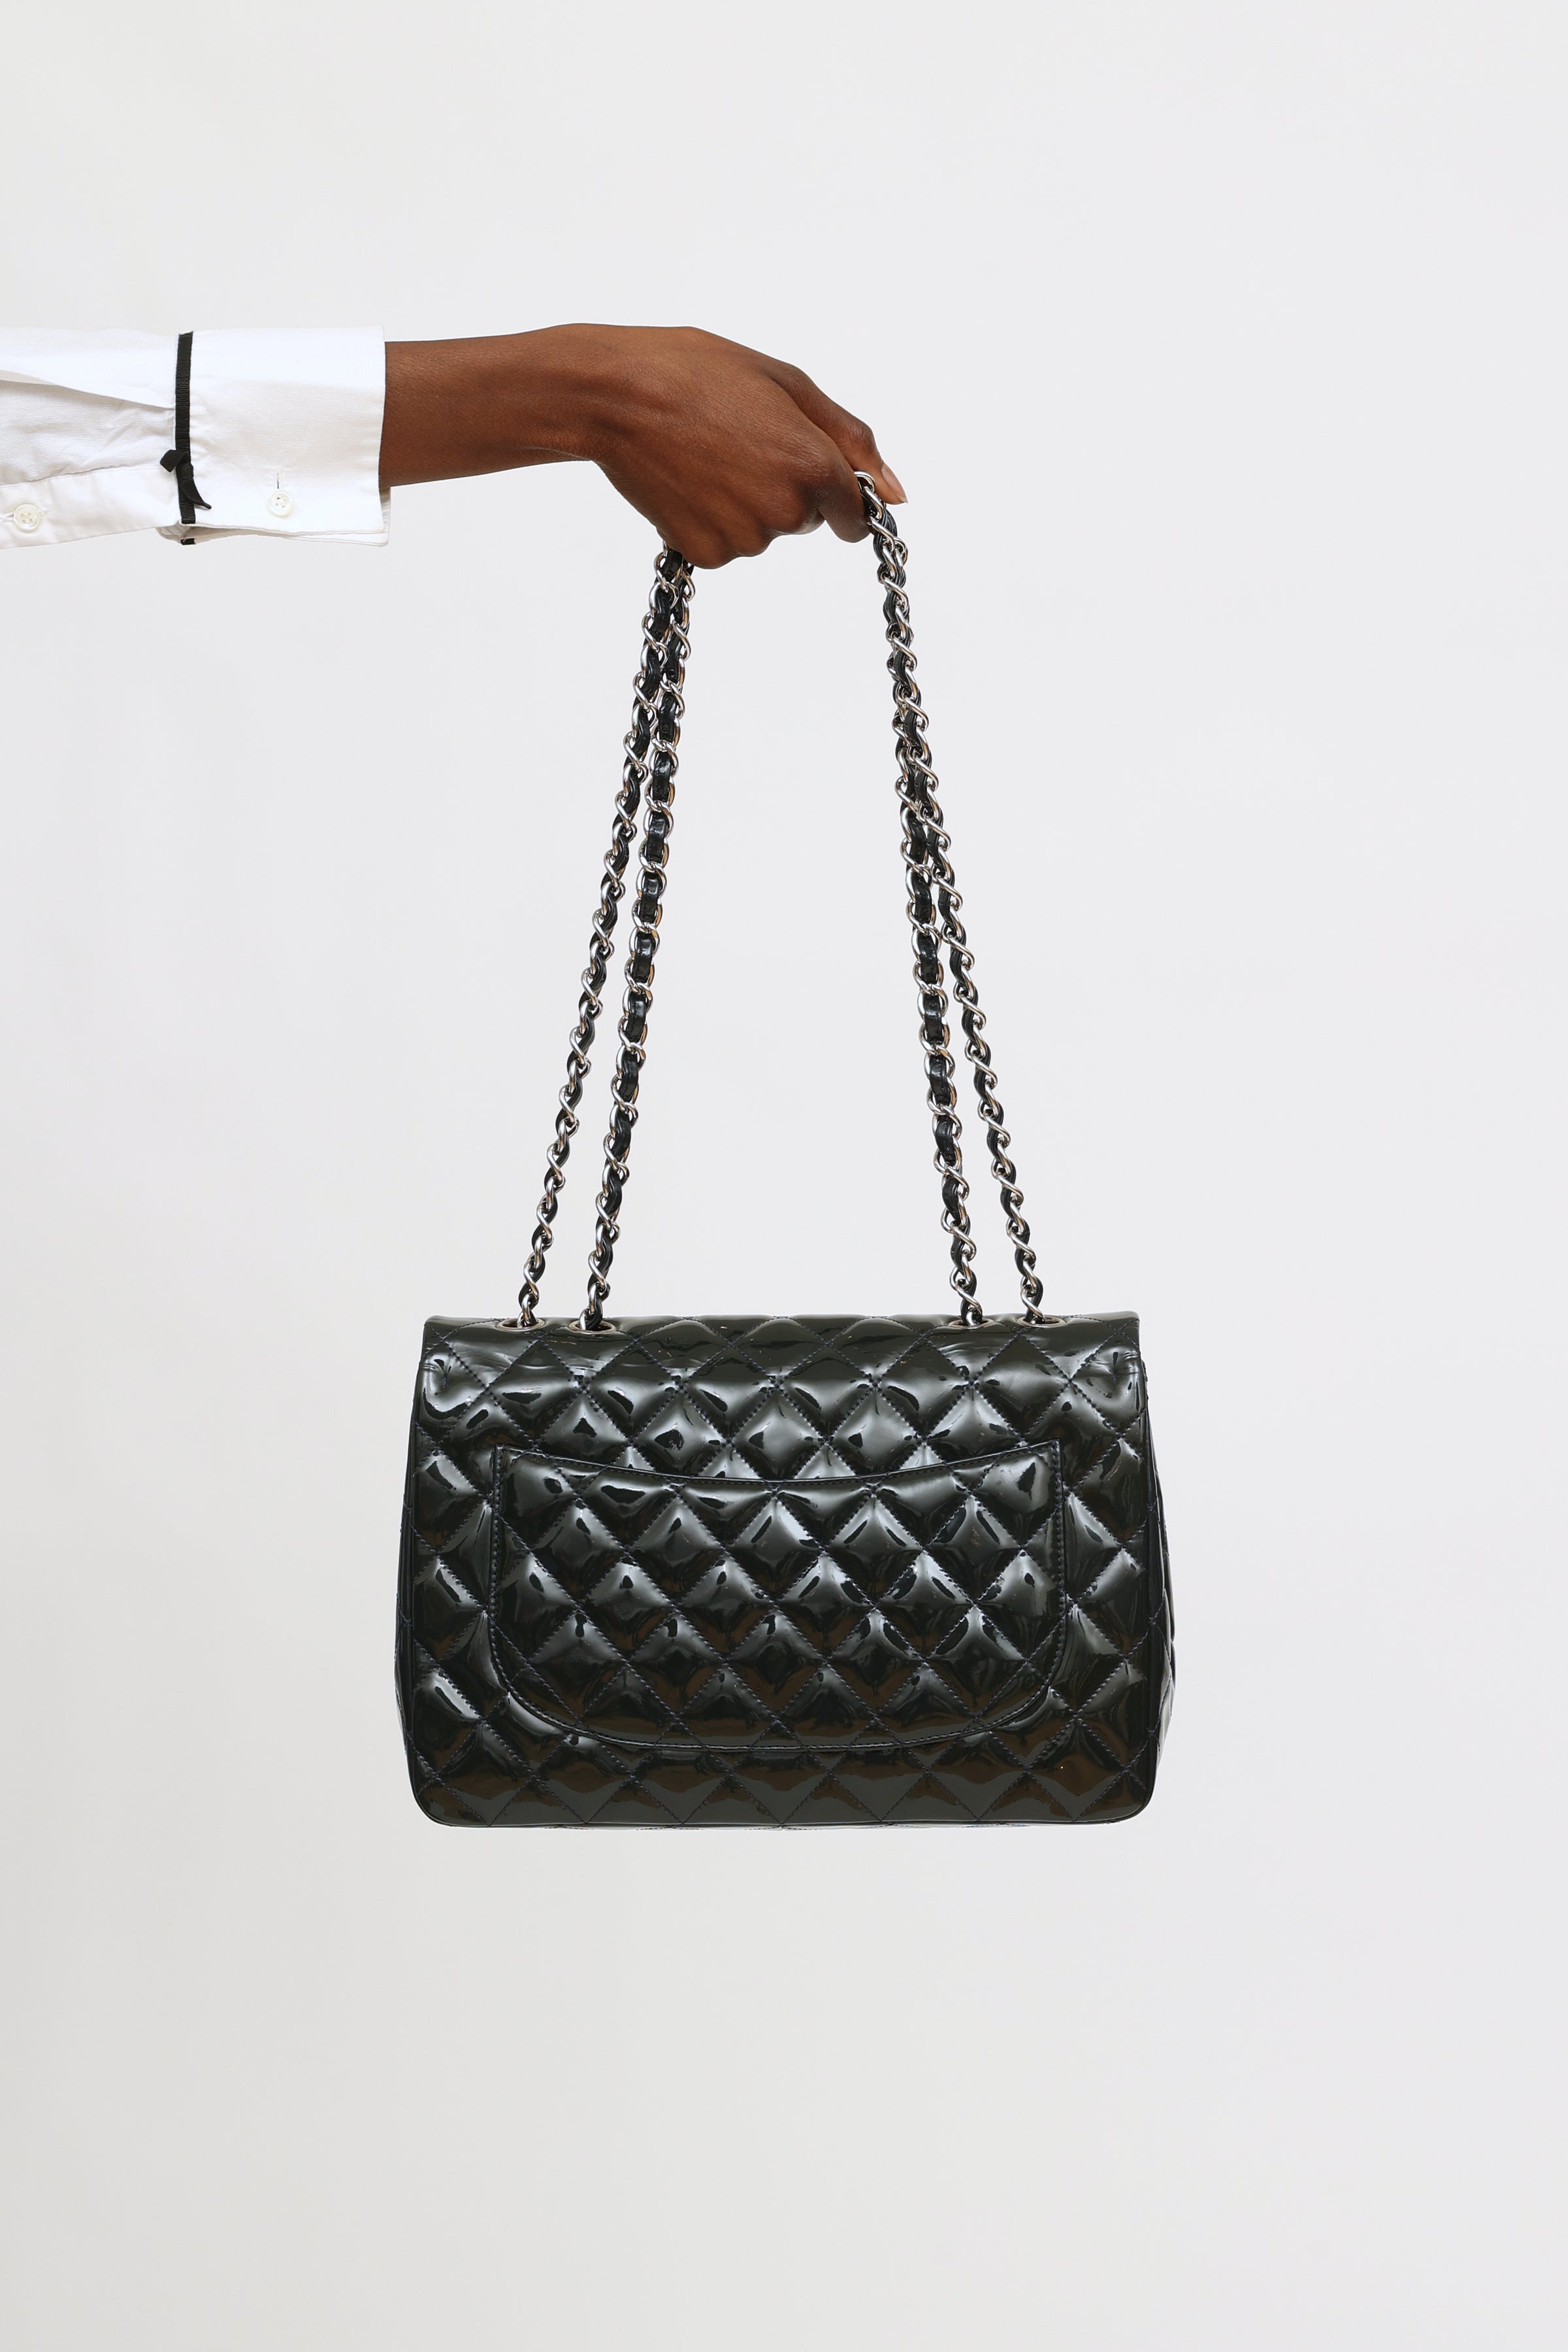 Pre-owned Chanel 2009 Medium Double Flap Shoulder Bag In Black